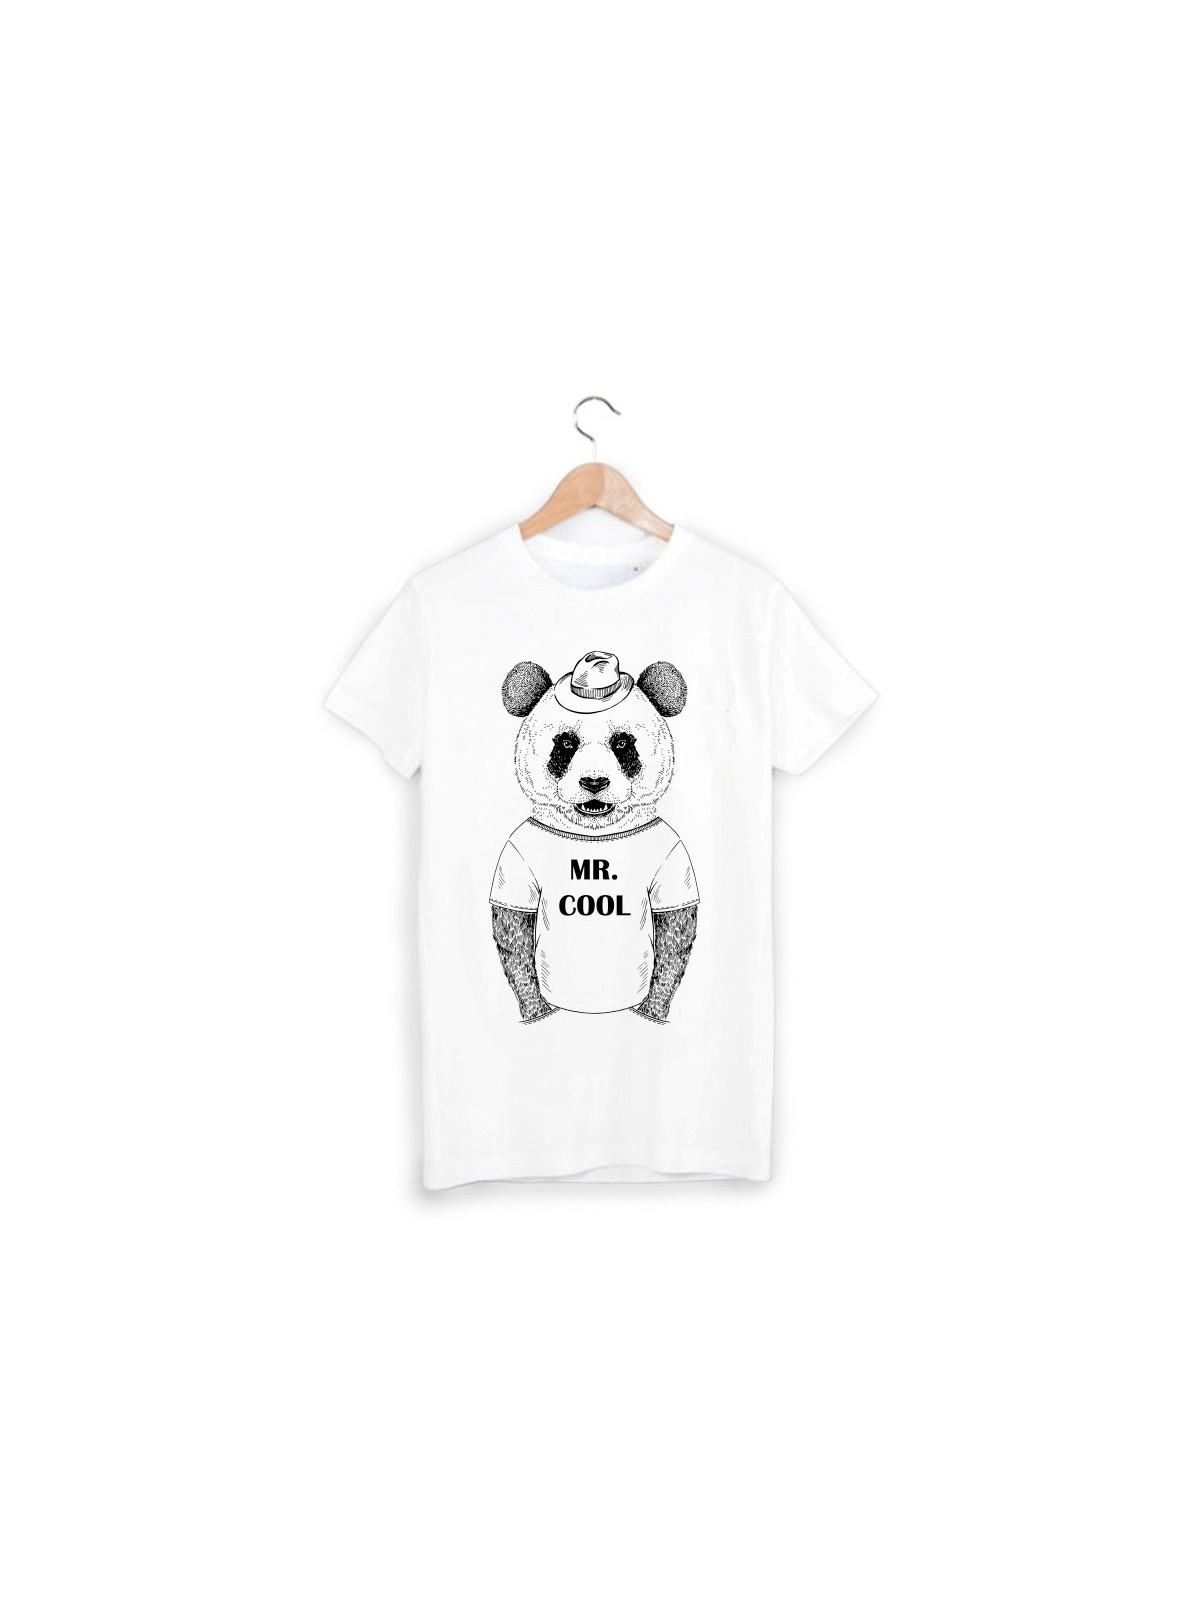 T-Shirt panda ref 1003